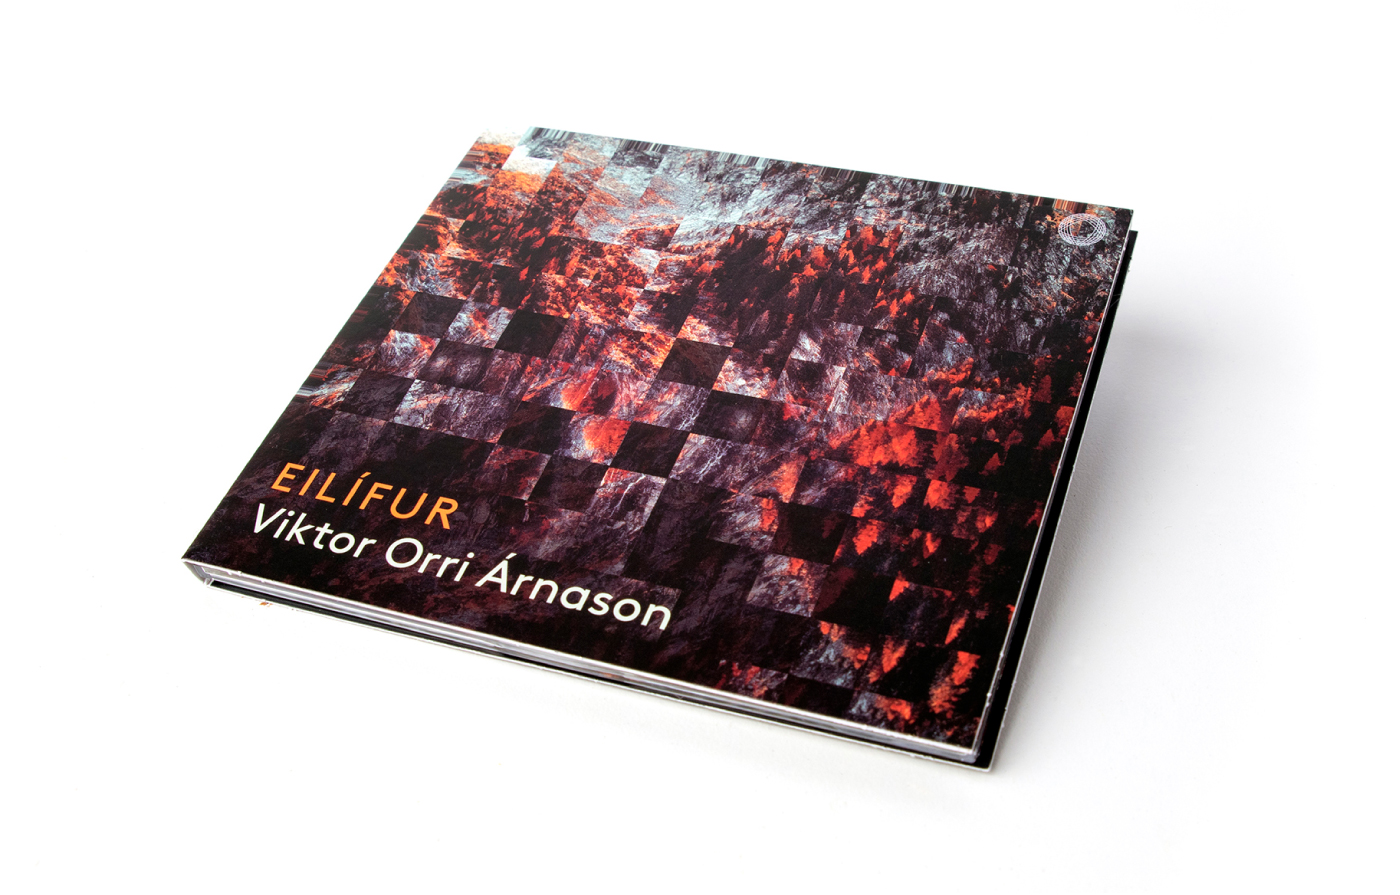 CD packaging for Viktor Orri Árnasson's album release "Eilífur" by Yvonne Hartmann